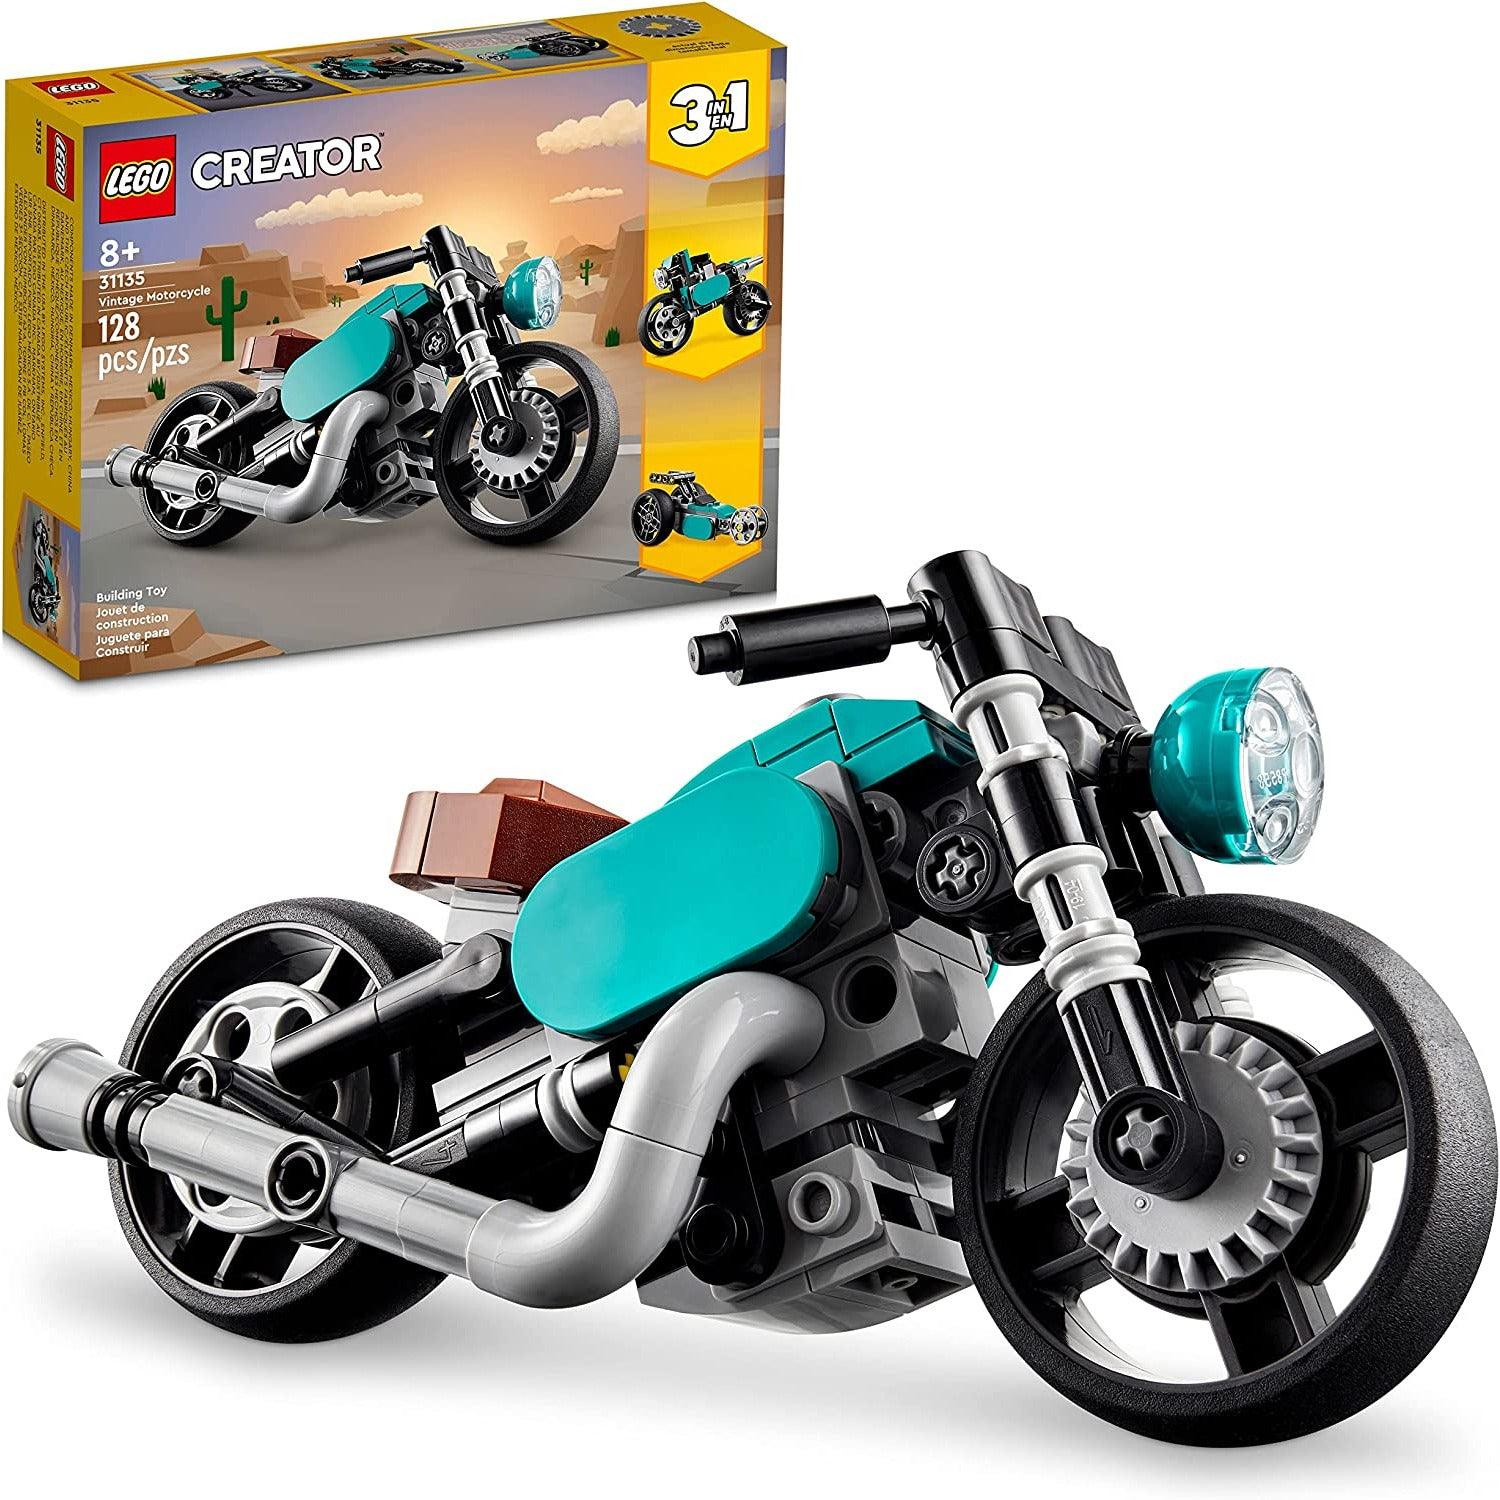 LEGO 31135 Creator 3 في 1 مجموعة دراجات نارية كلاسيكية ، لعبة دراجة نارية كلاسيكية إلى دراجة نارية في الشارع إلى سيارة دراغستر